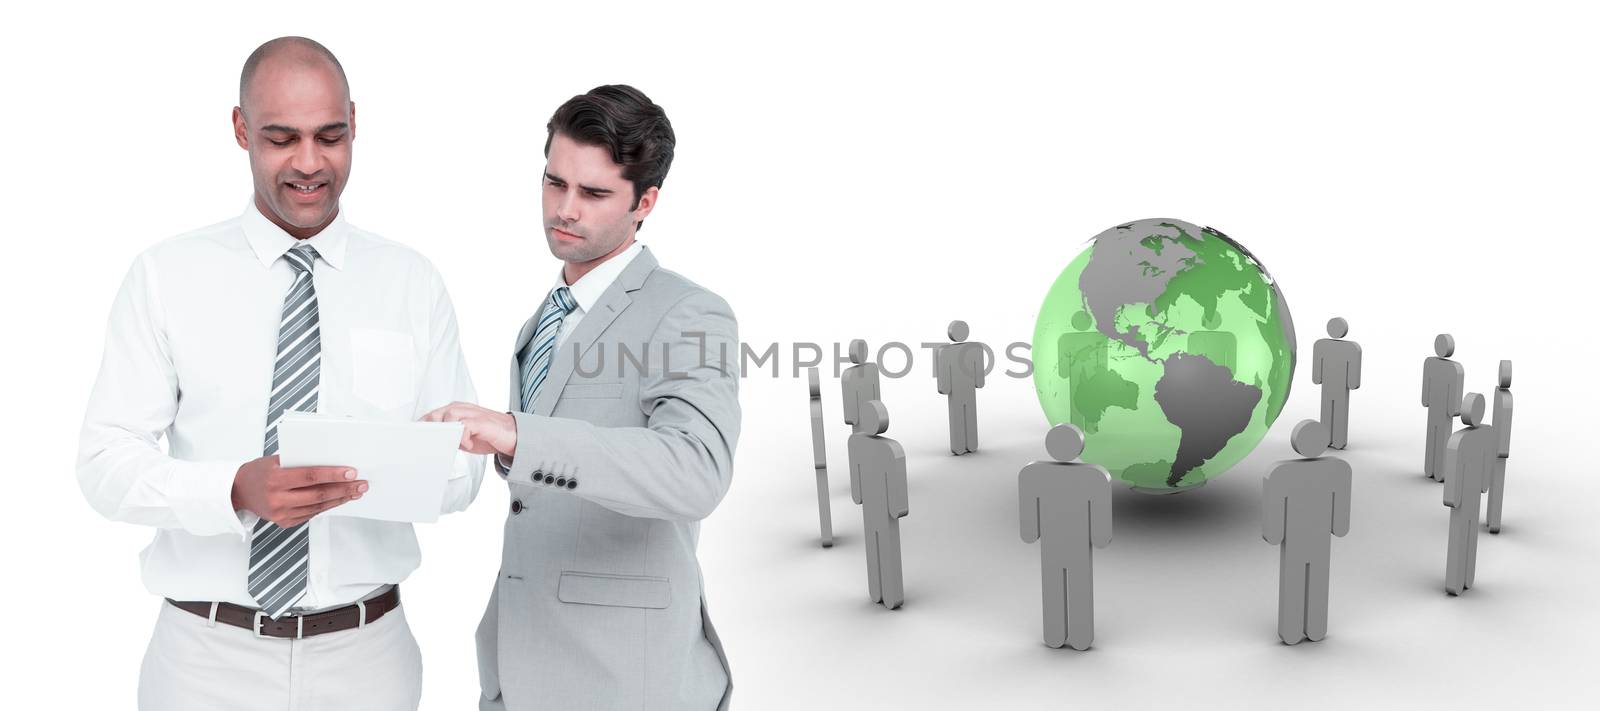 Composite image of businessmen working together by Wavebreakmedia